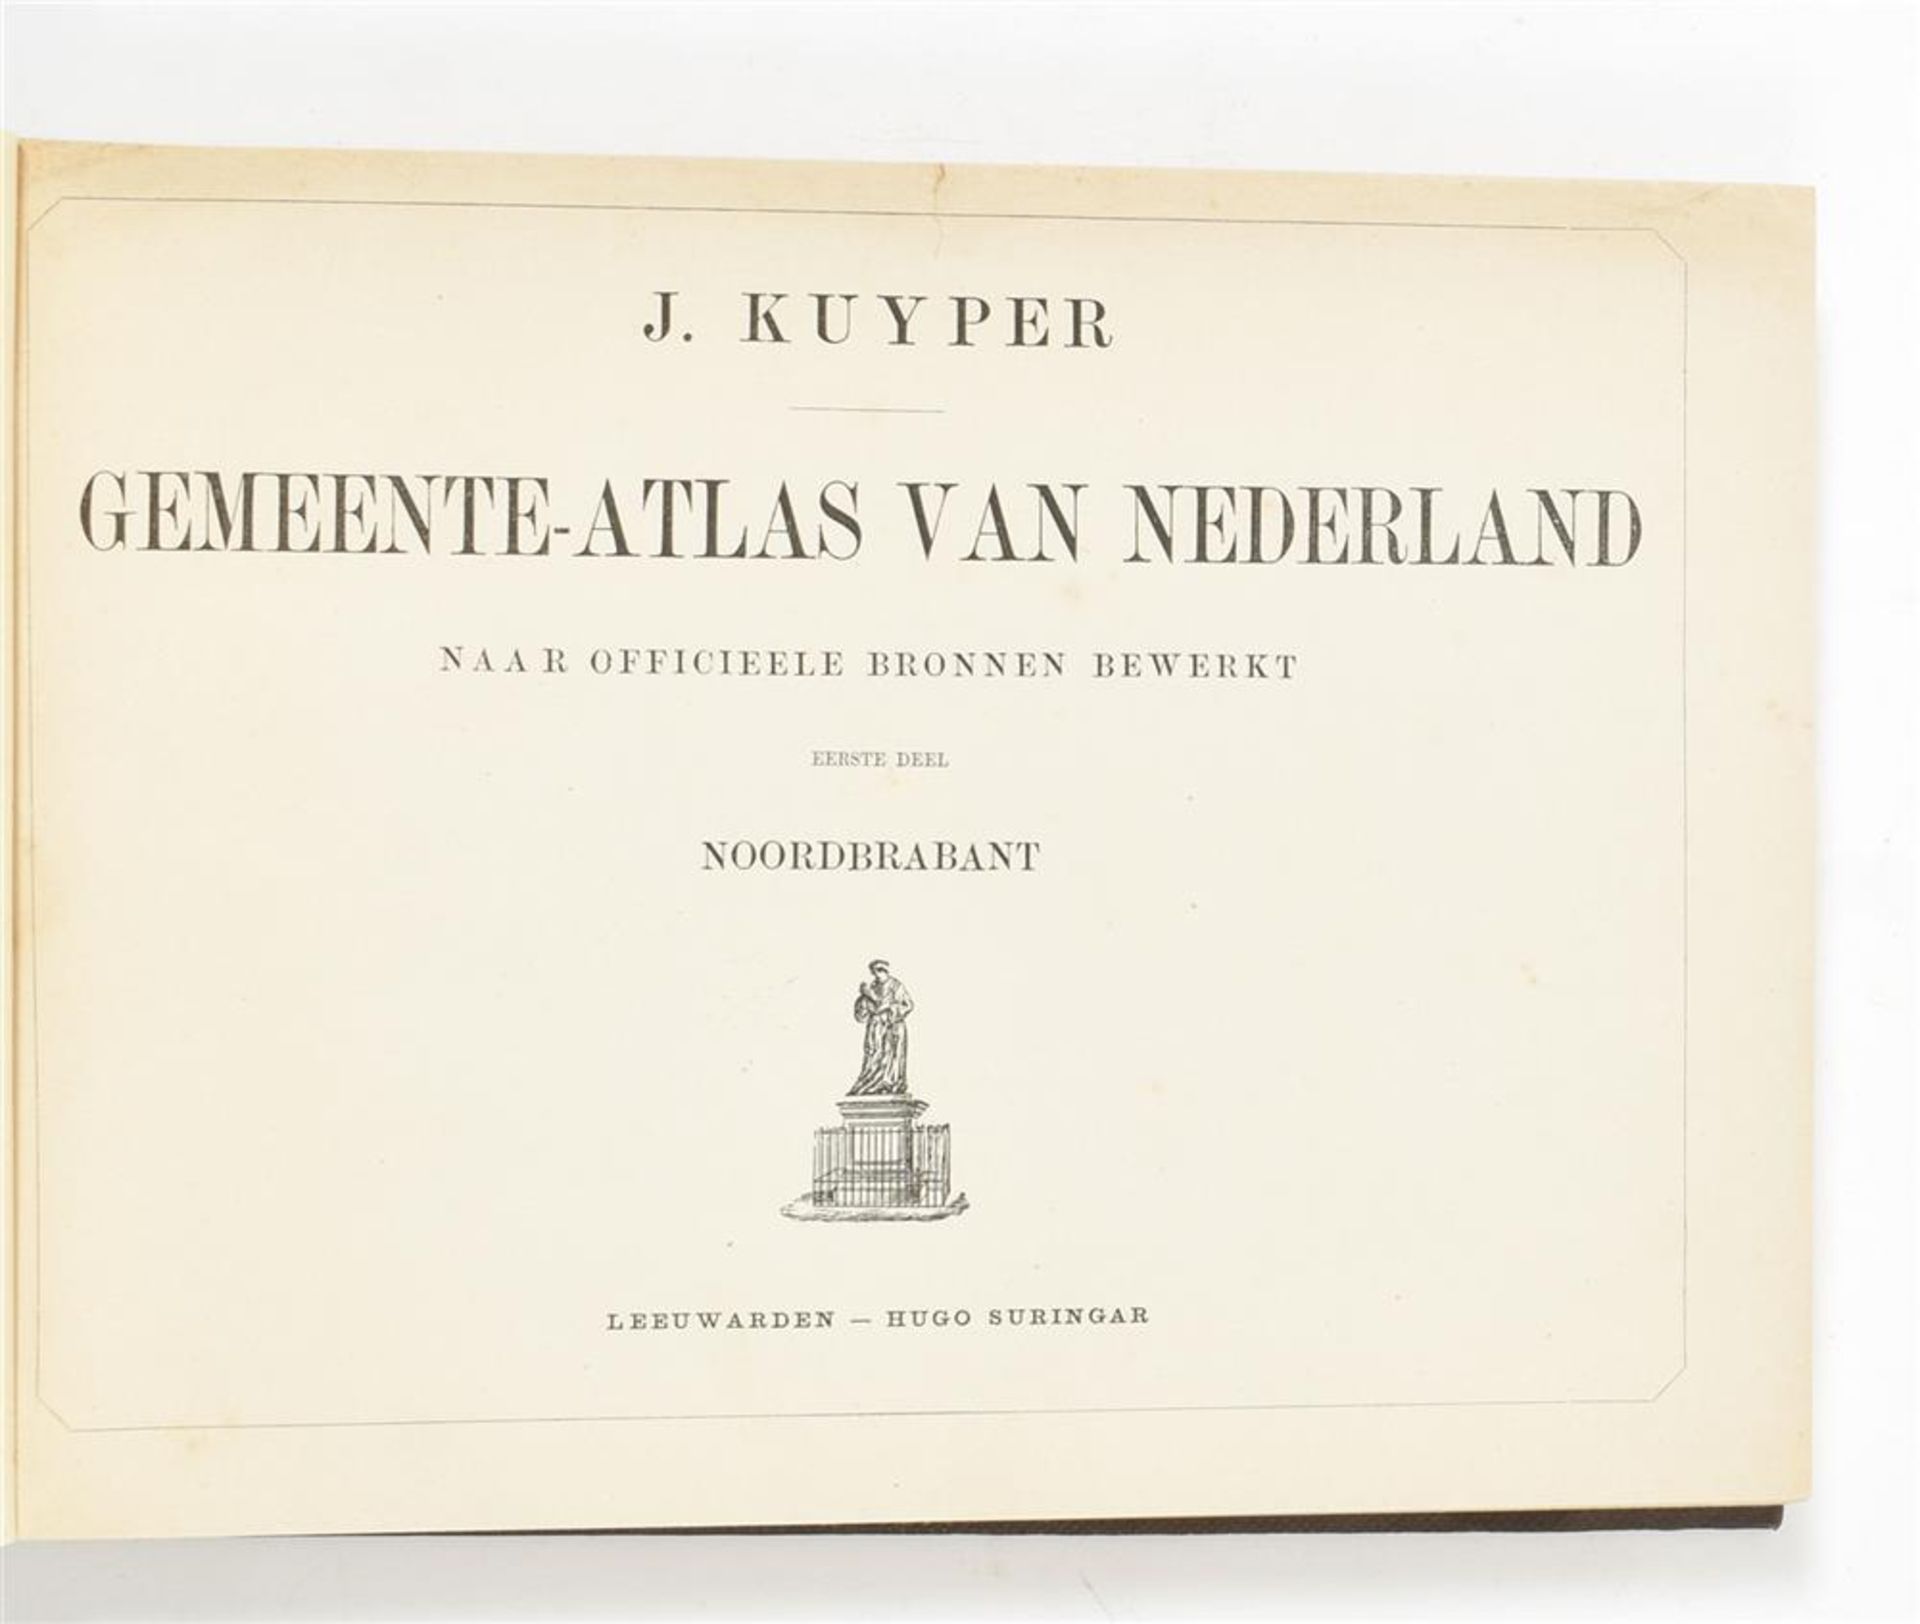 [Brabant] Kuyper, J. Gemeente-atlas van Nederland (...). Eerste deel. Noord-Brabant - Image 2 of 6